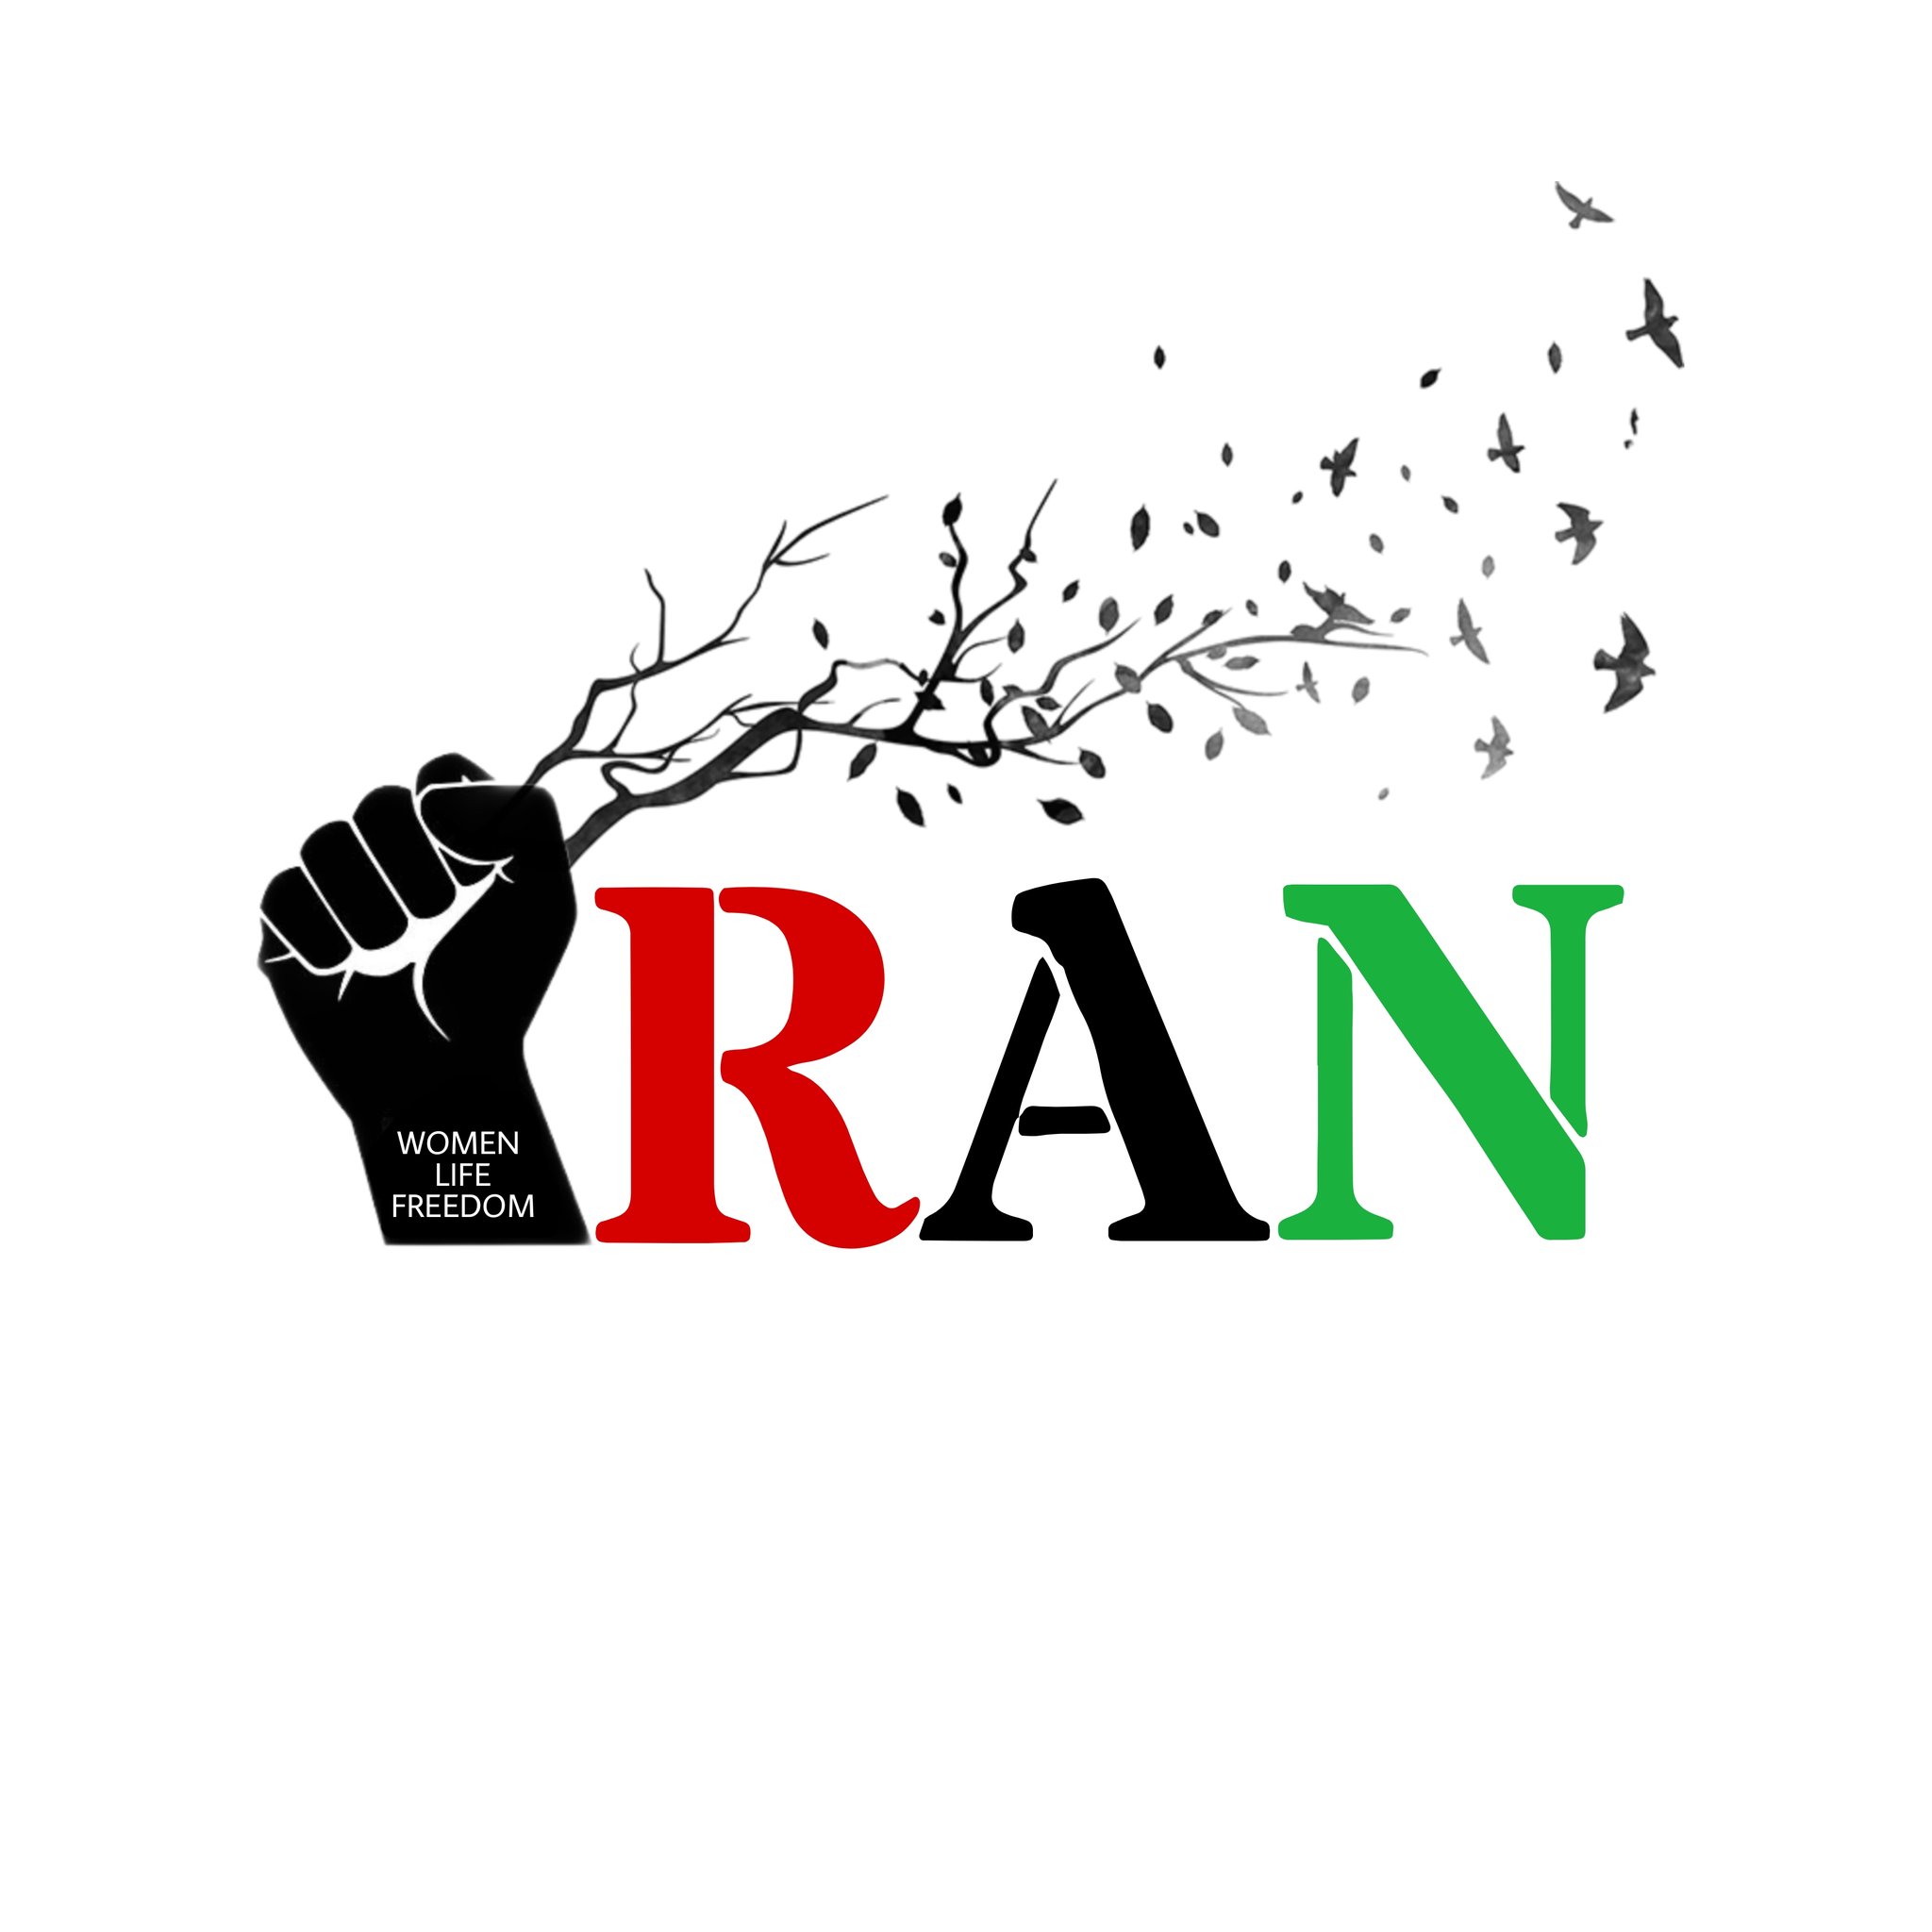 Iran Revolution Art No. FgAmMvRXwAEApY4